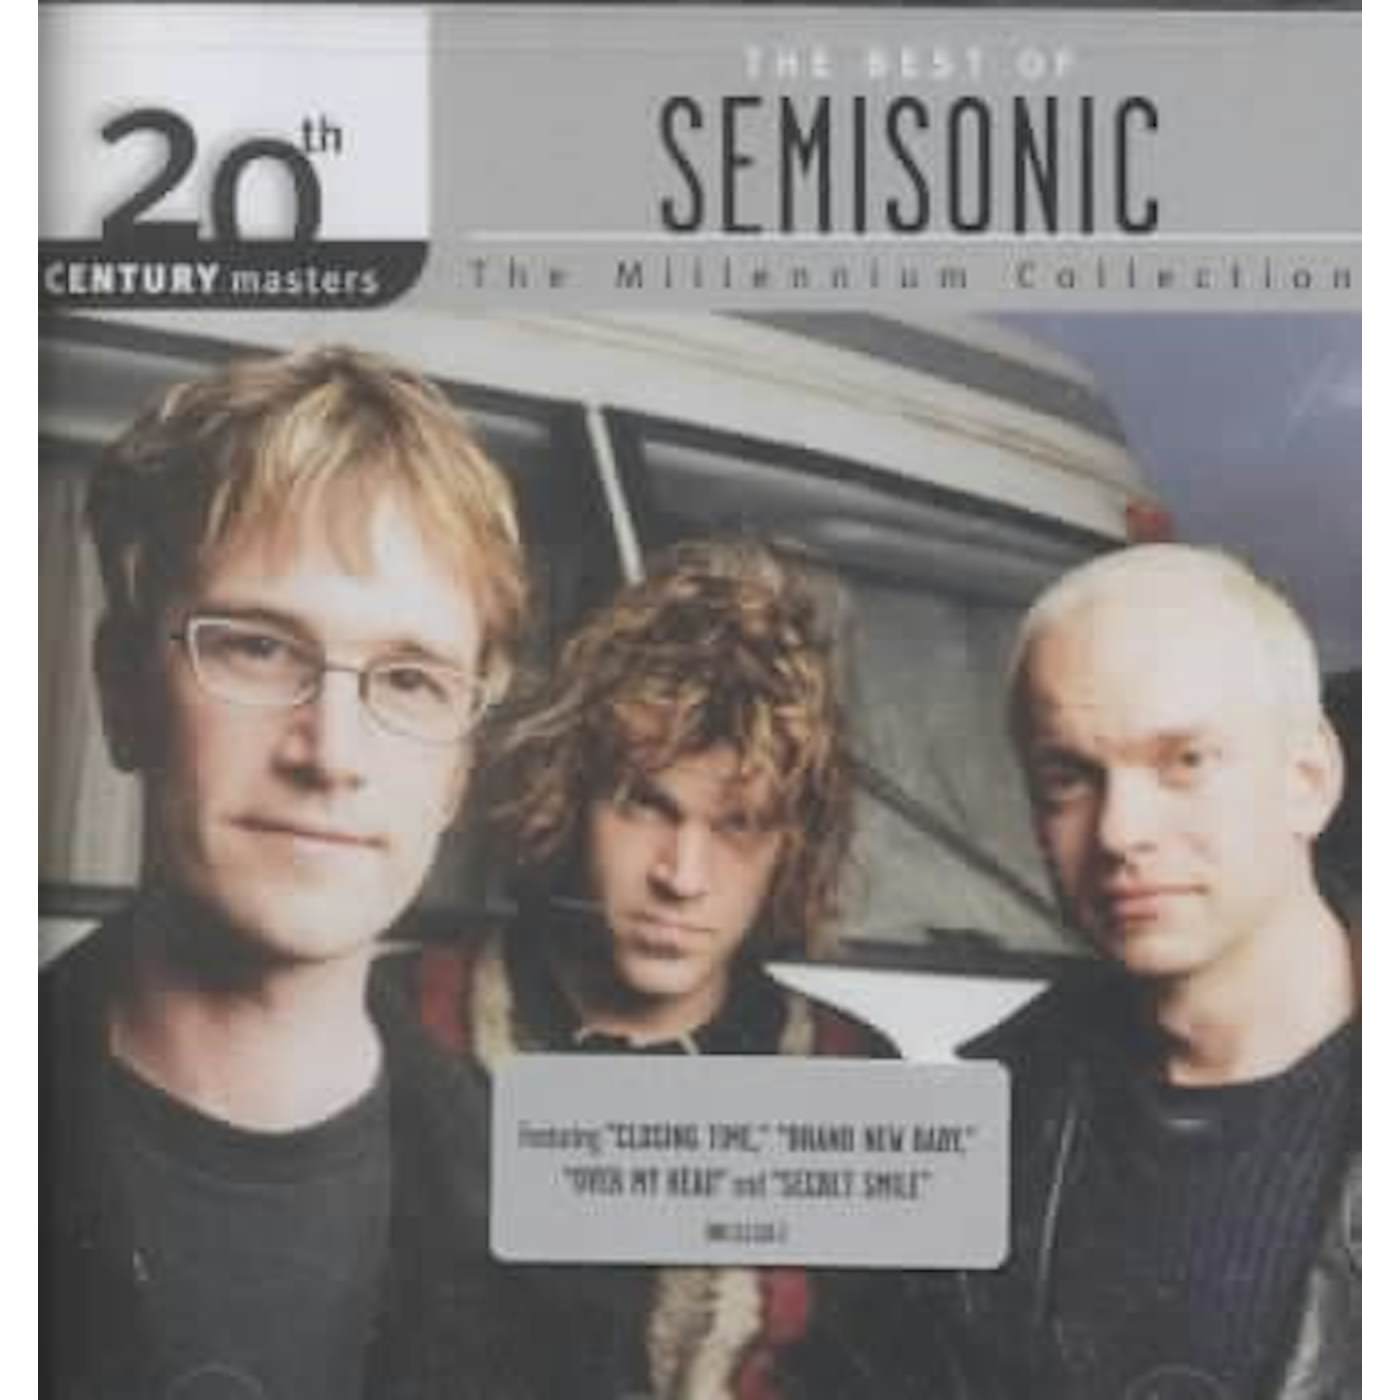 Semisonic Millennium Collection - 20th Century Masters CD